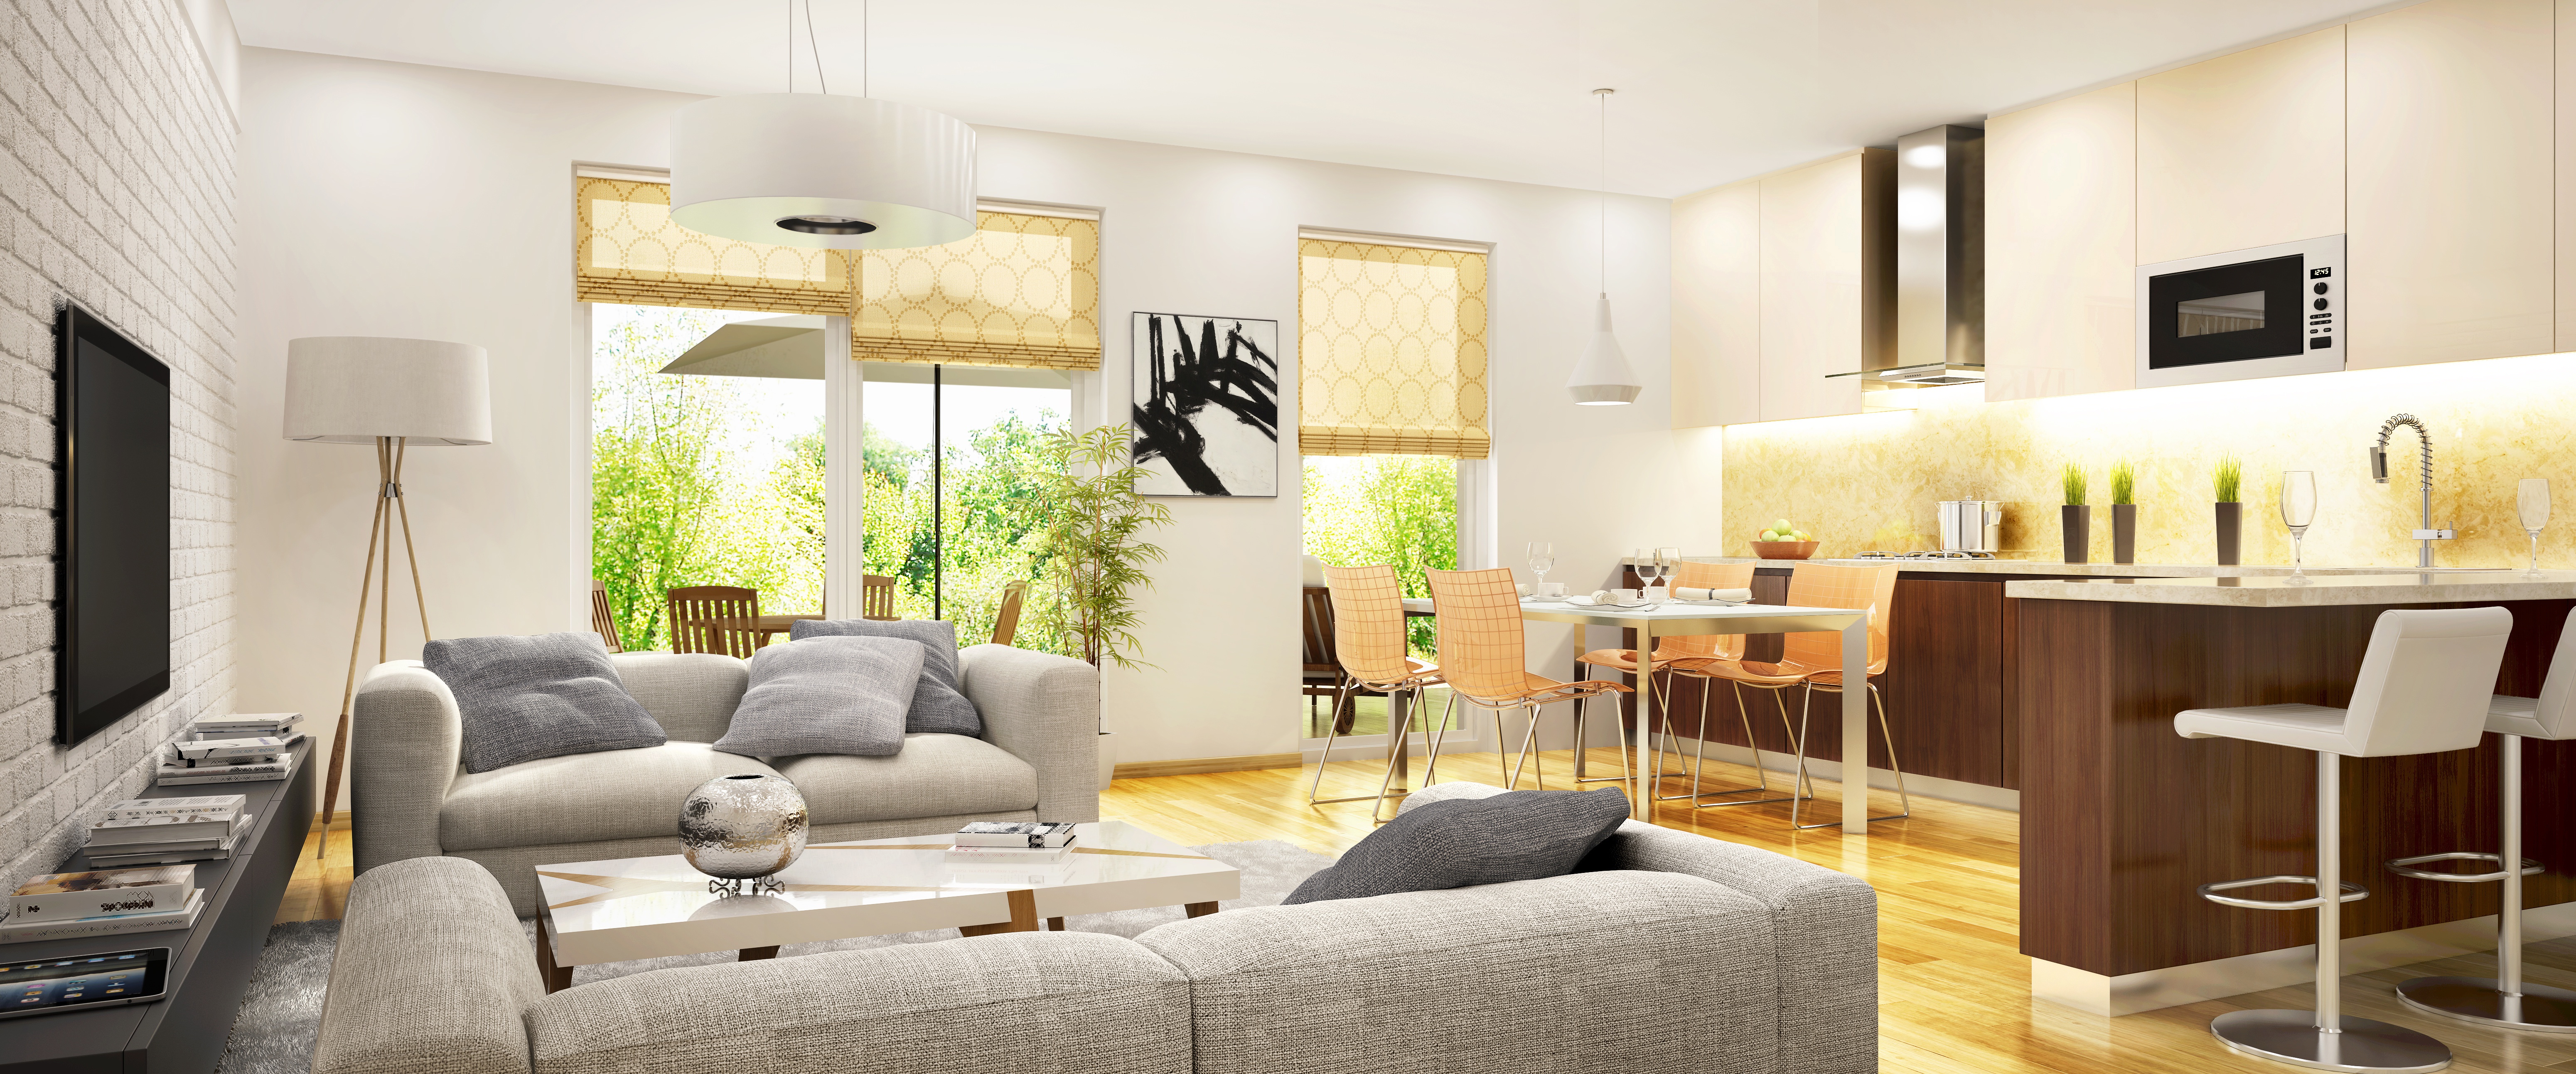 Design Furniture Living Room Room Sofa 6200x2585